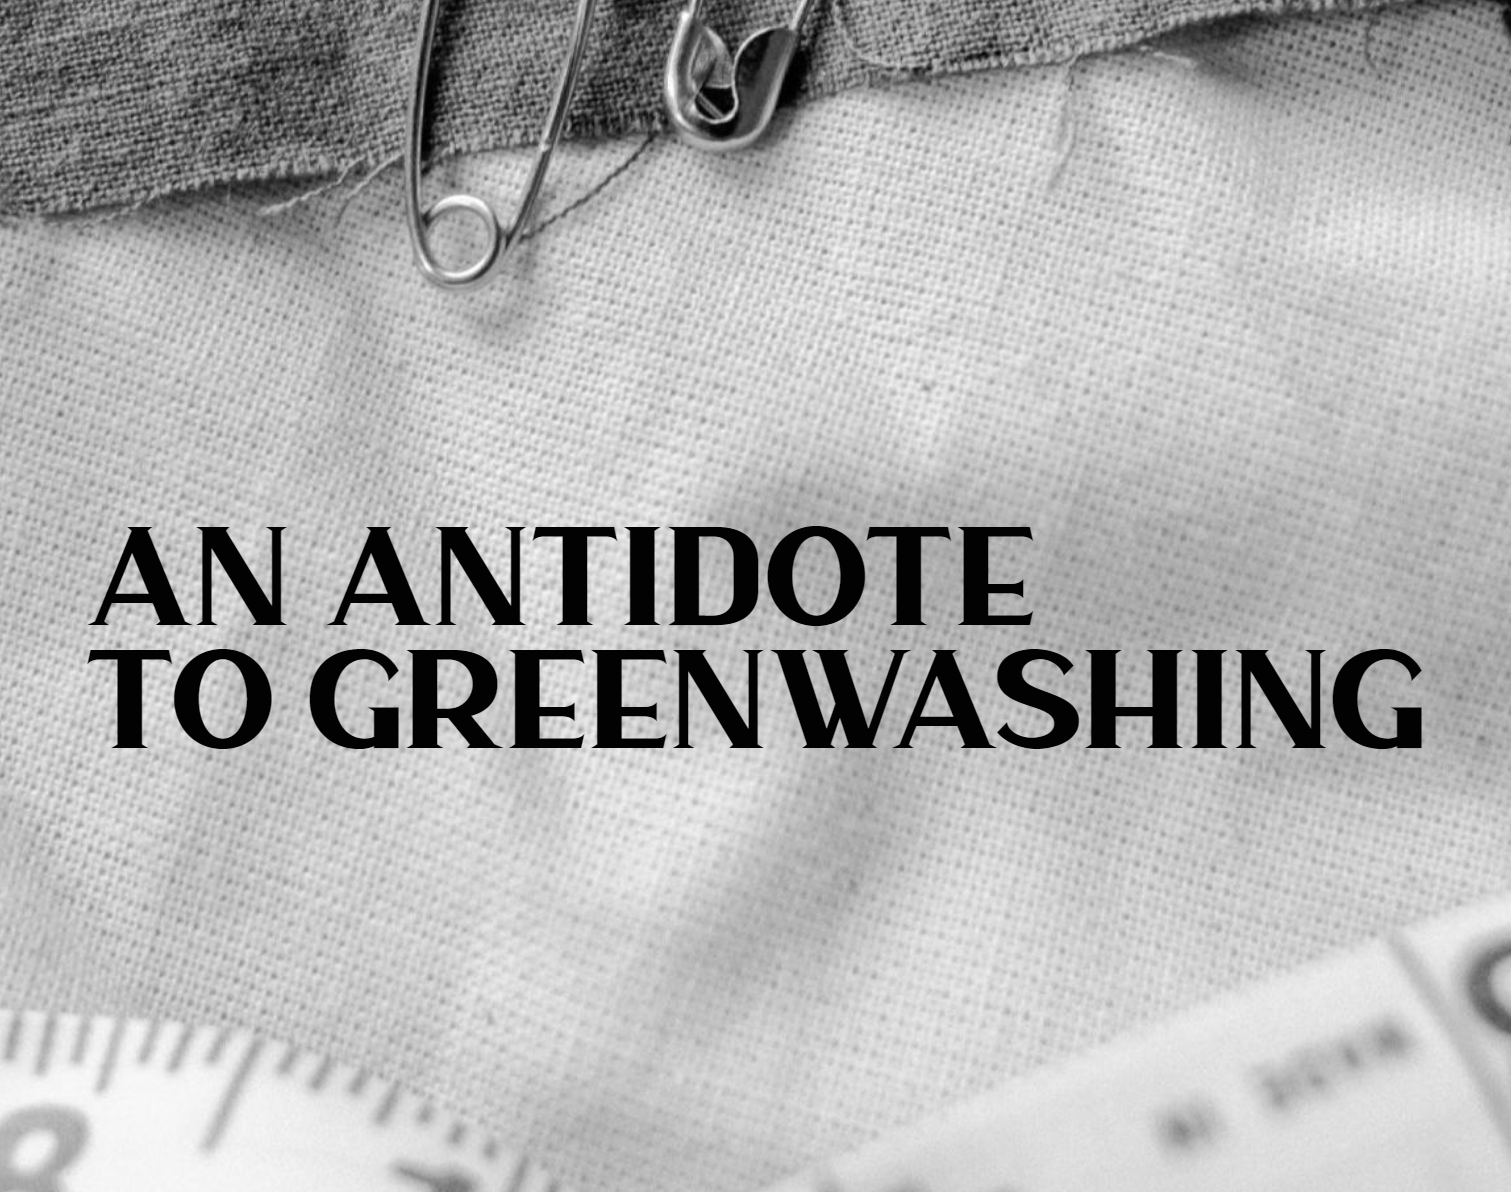 An antidote to greenwashing